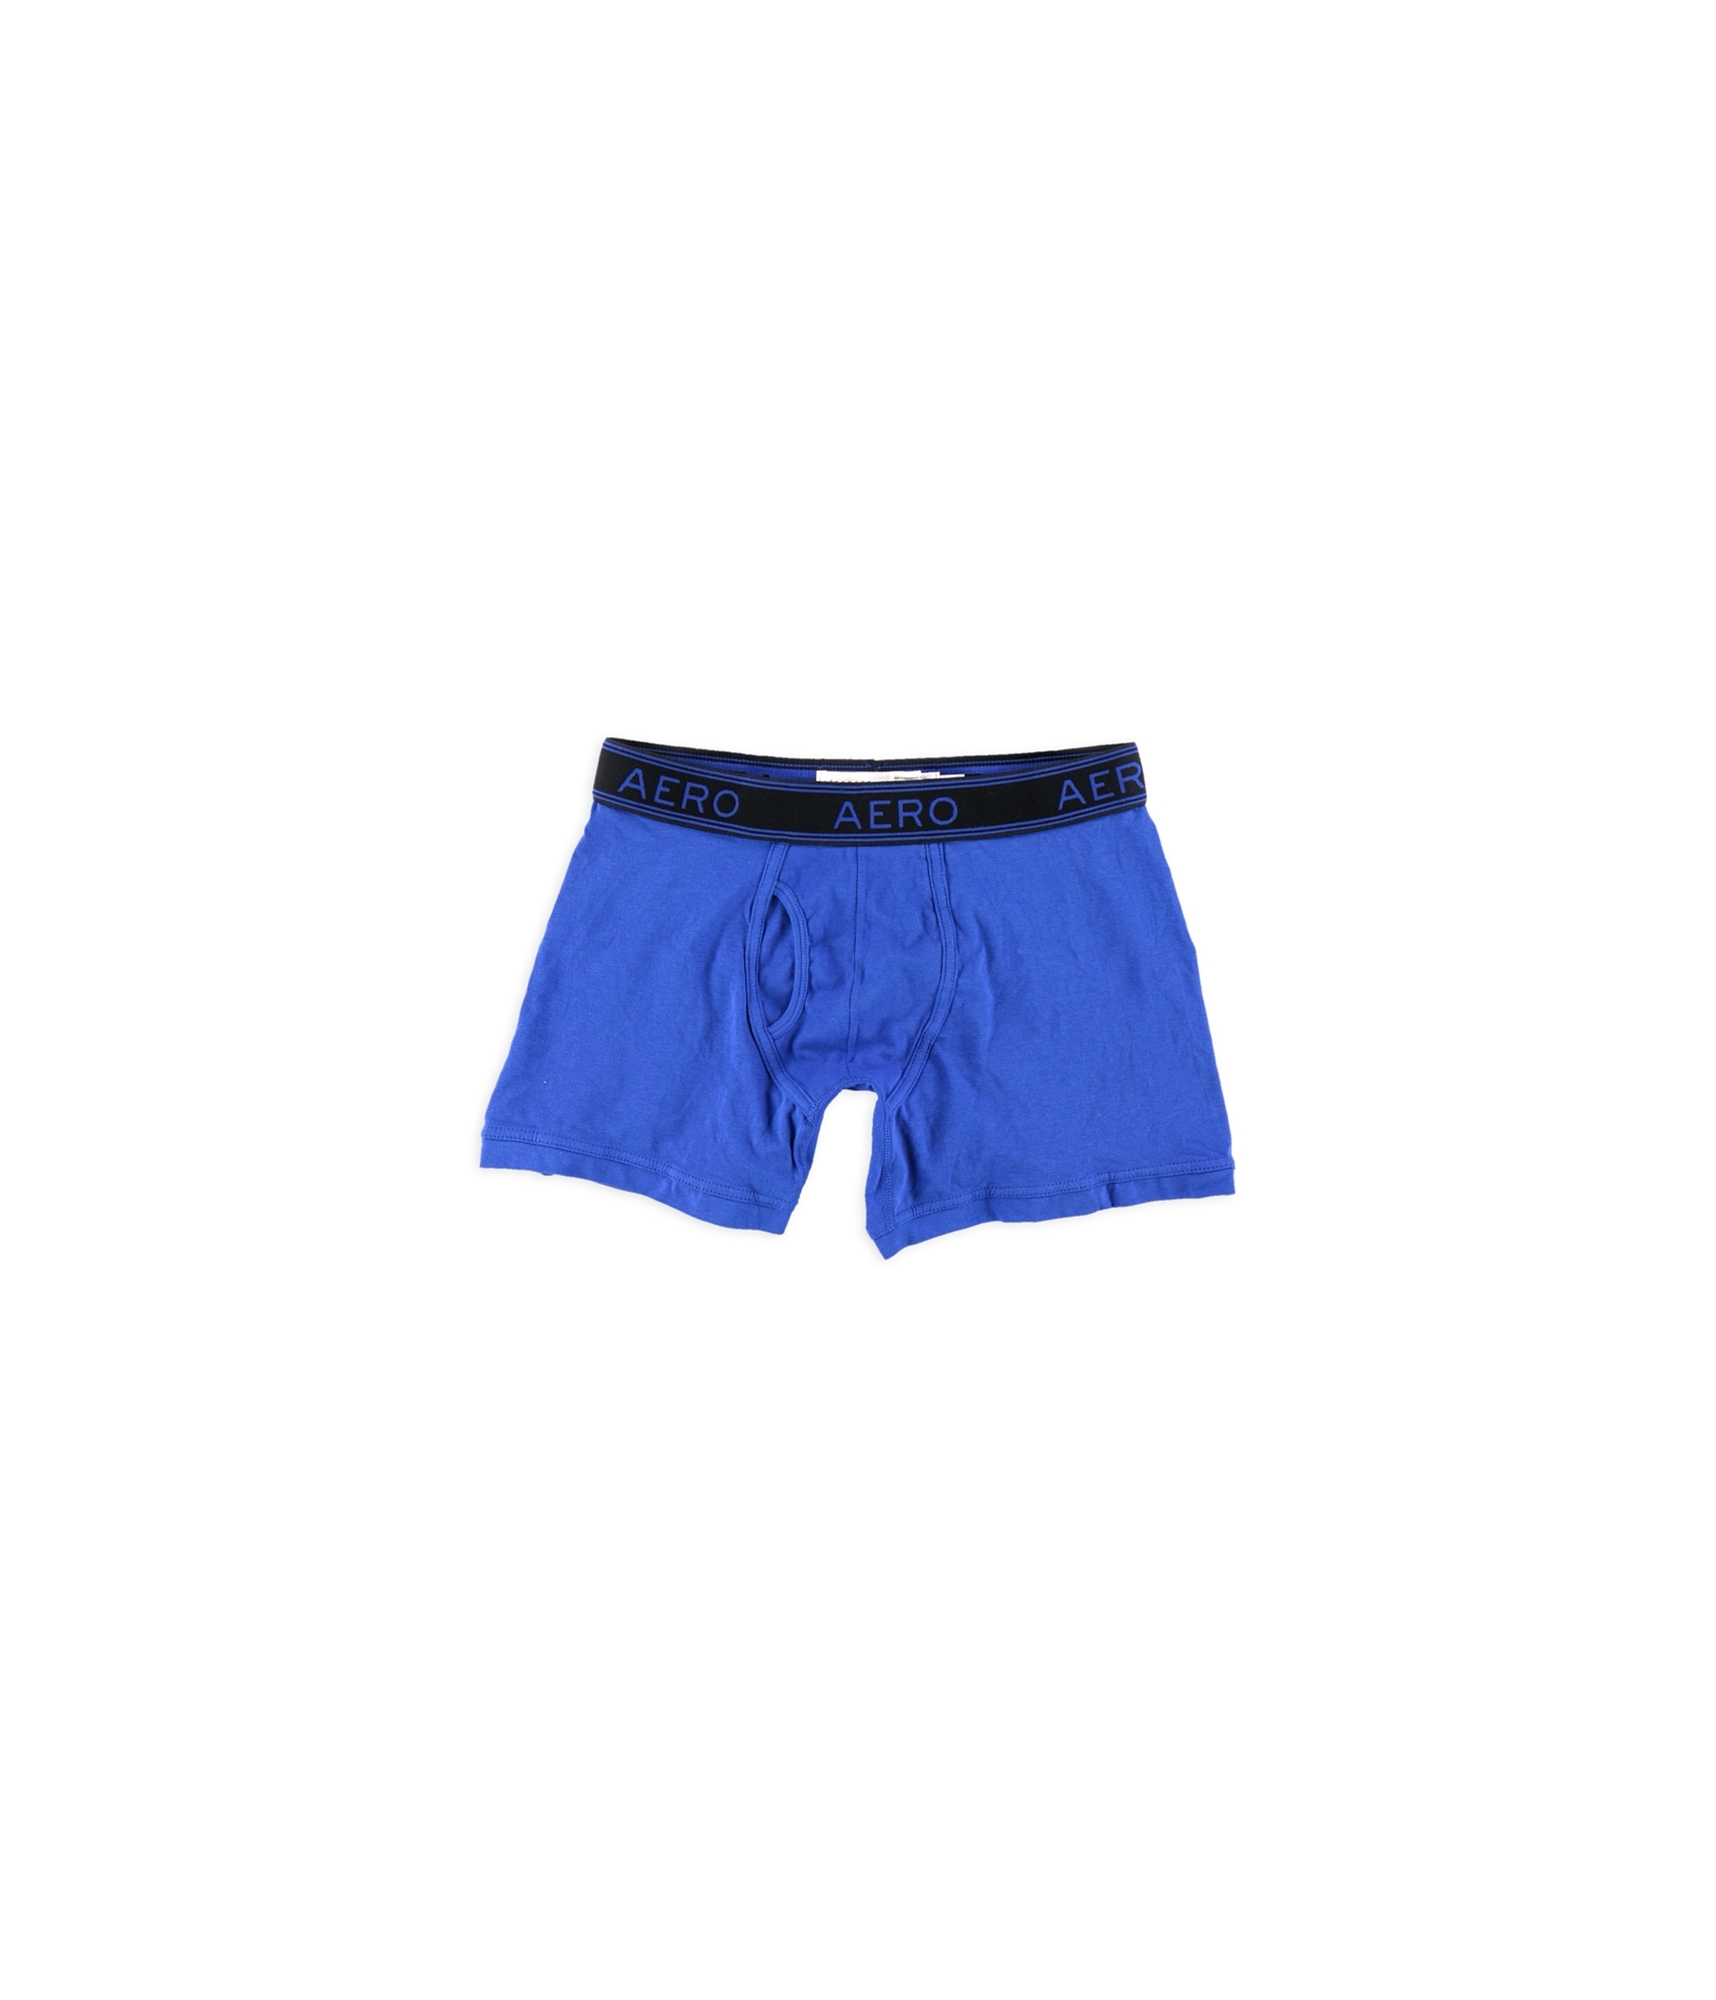 Buy a Aeropostale Mens Knit Underwear Boxer Briefs, TW5 | Tagsweekly